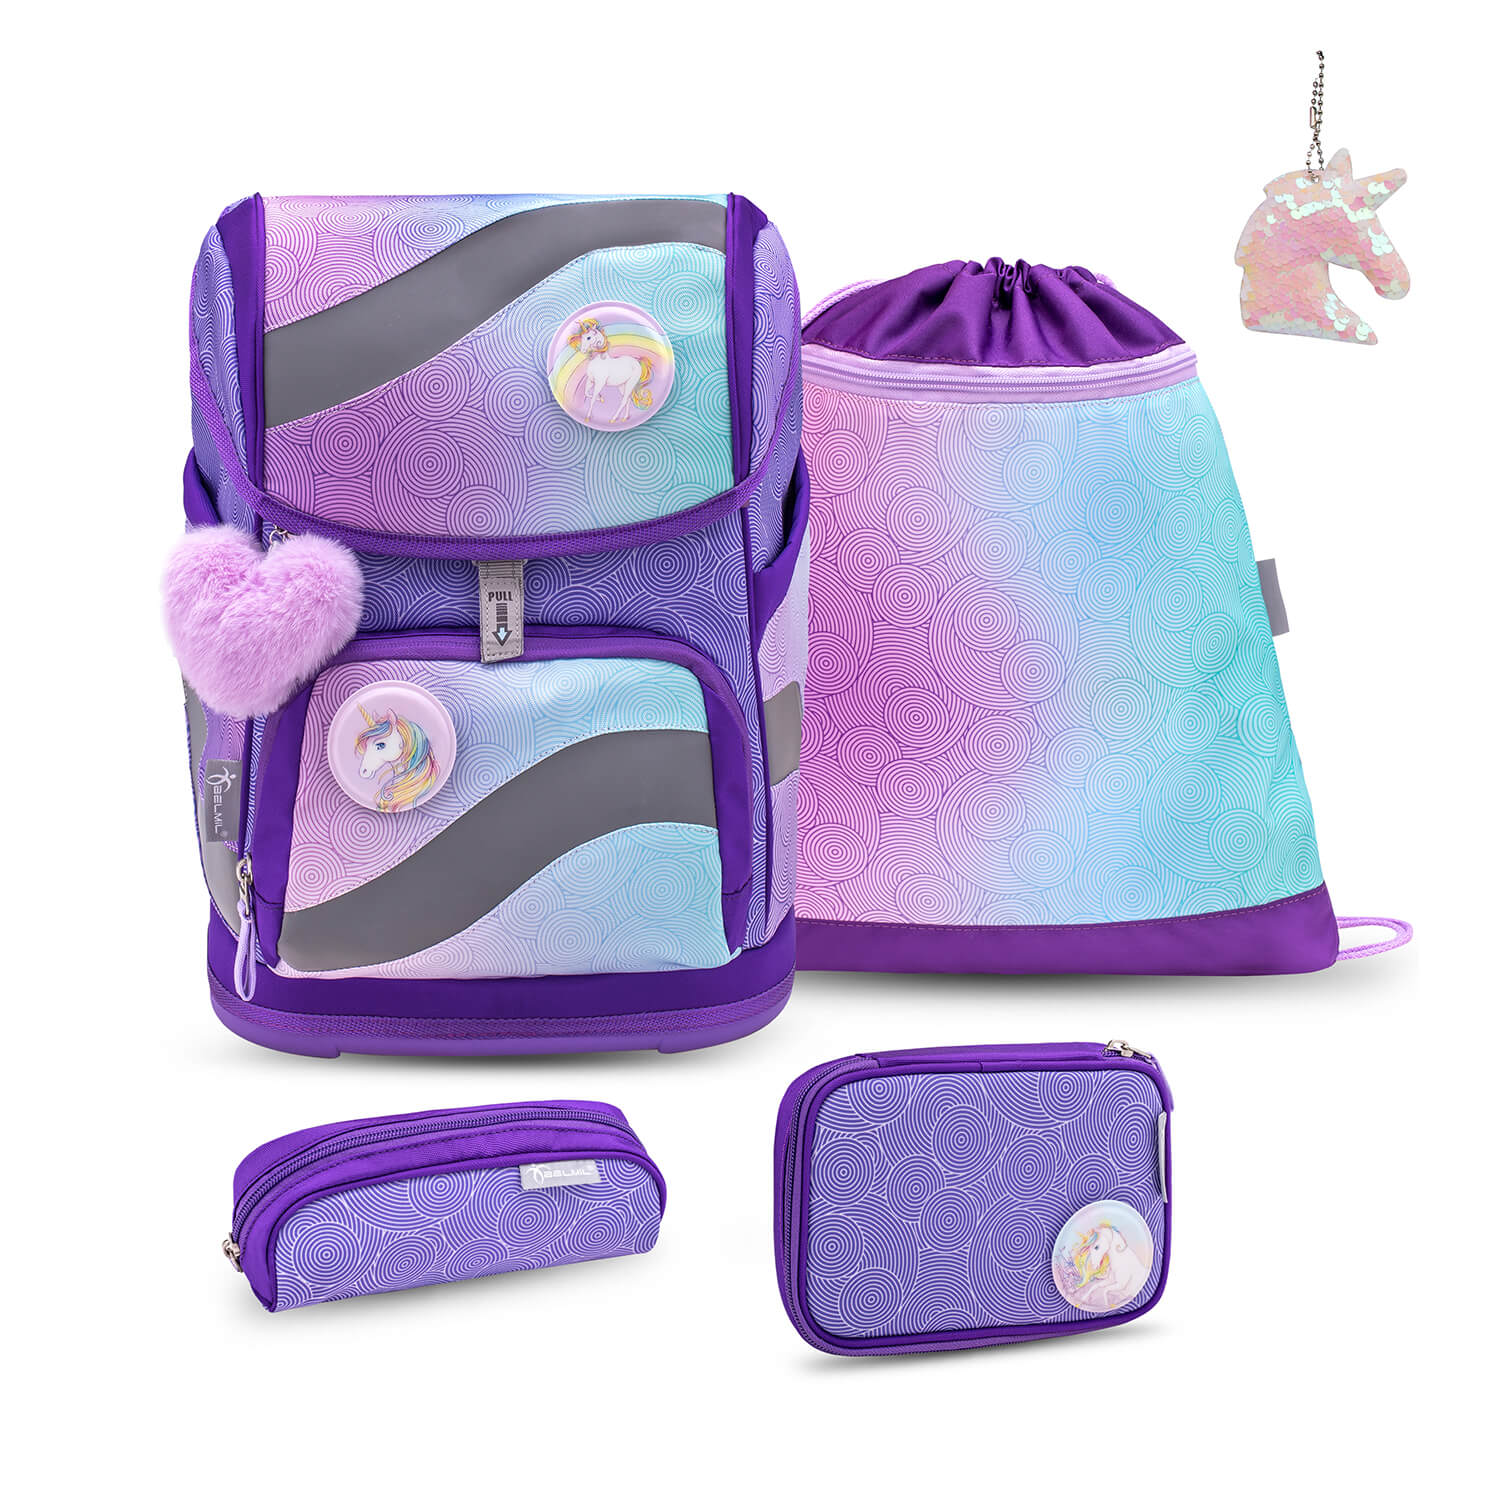 Smarty Wonder 2 schoolbag set 6 pcs with GRATIS keychain